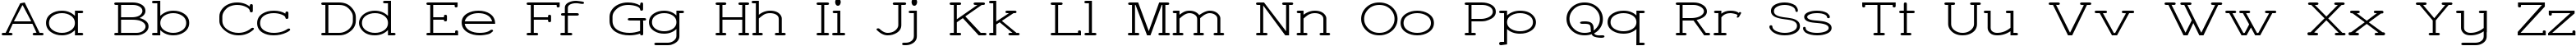 Пример написания английского алфавита шрифтом Charrington Wide